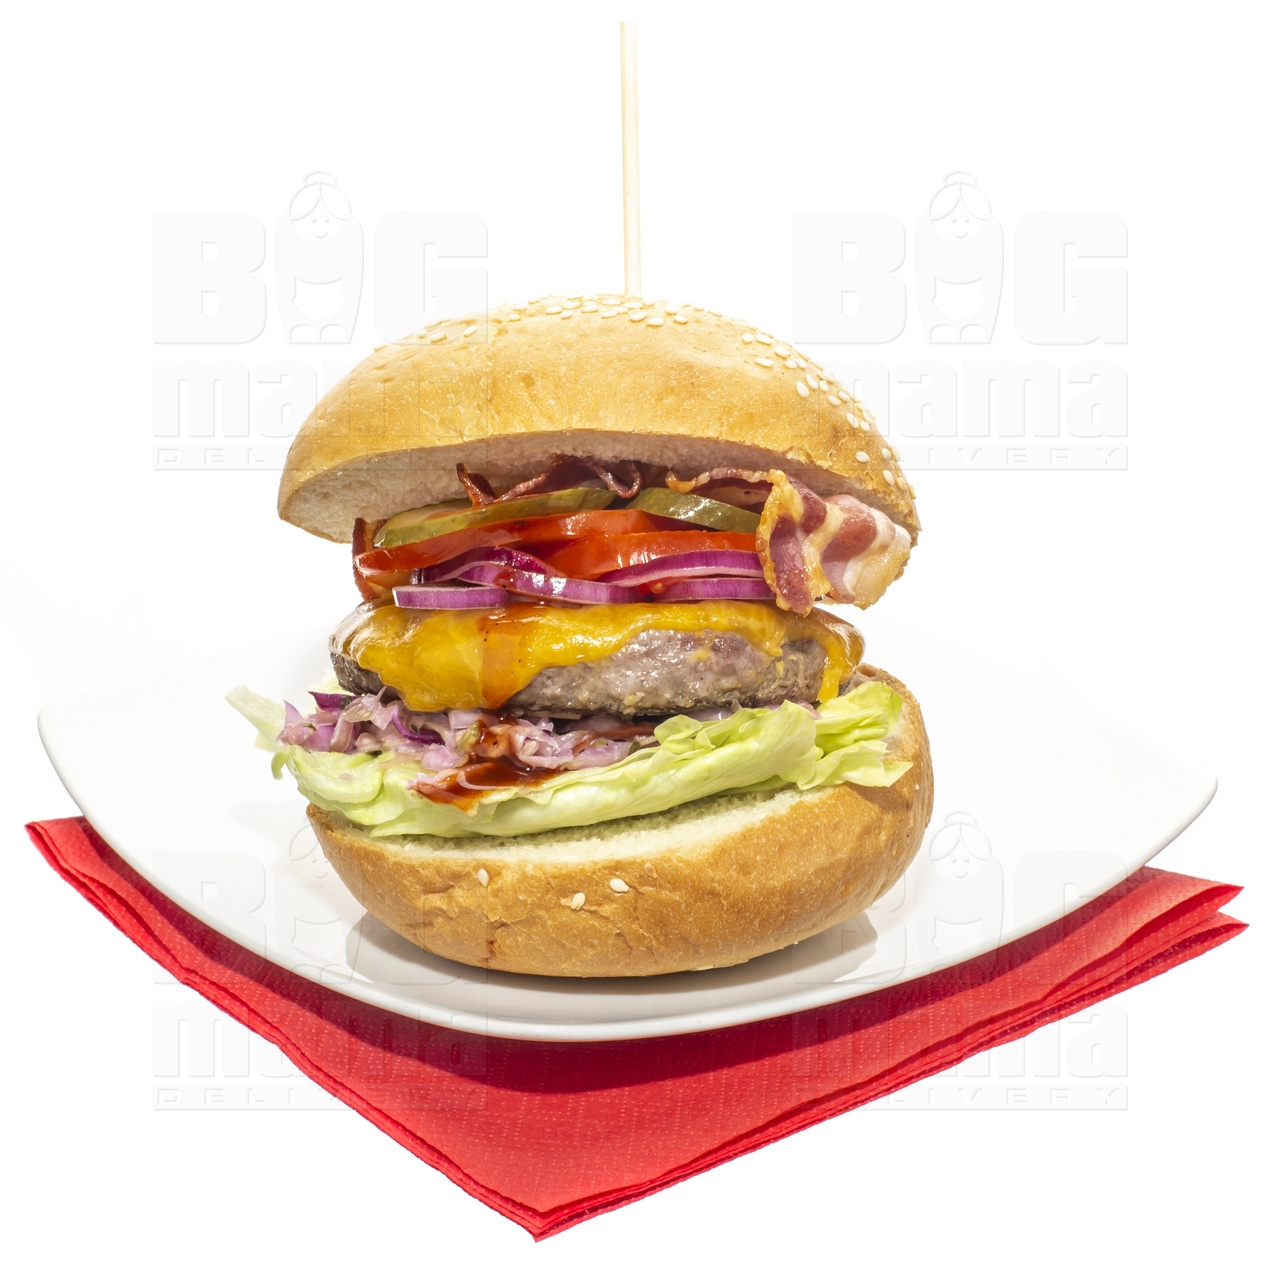 Product #204 image - Hamburger